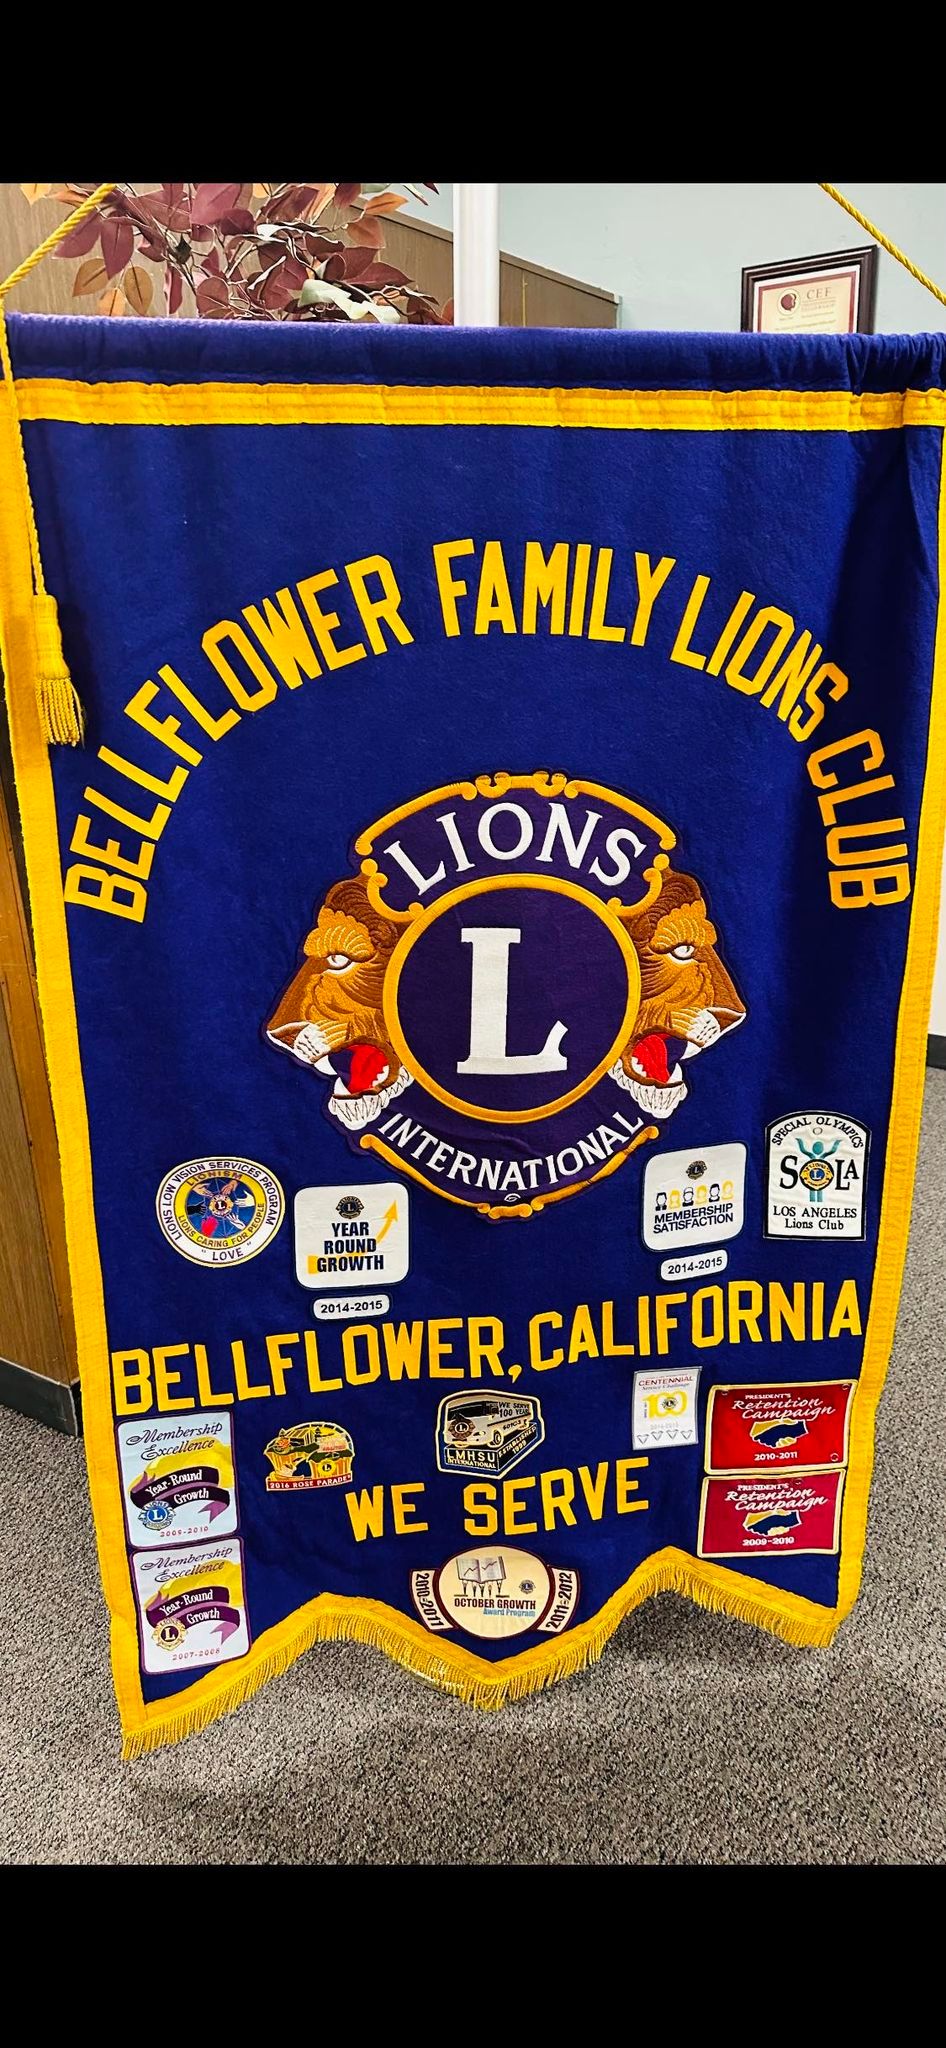 Bellflower Family Lions Club Harrah fun-around fundraiser trip